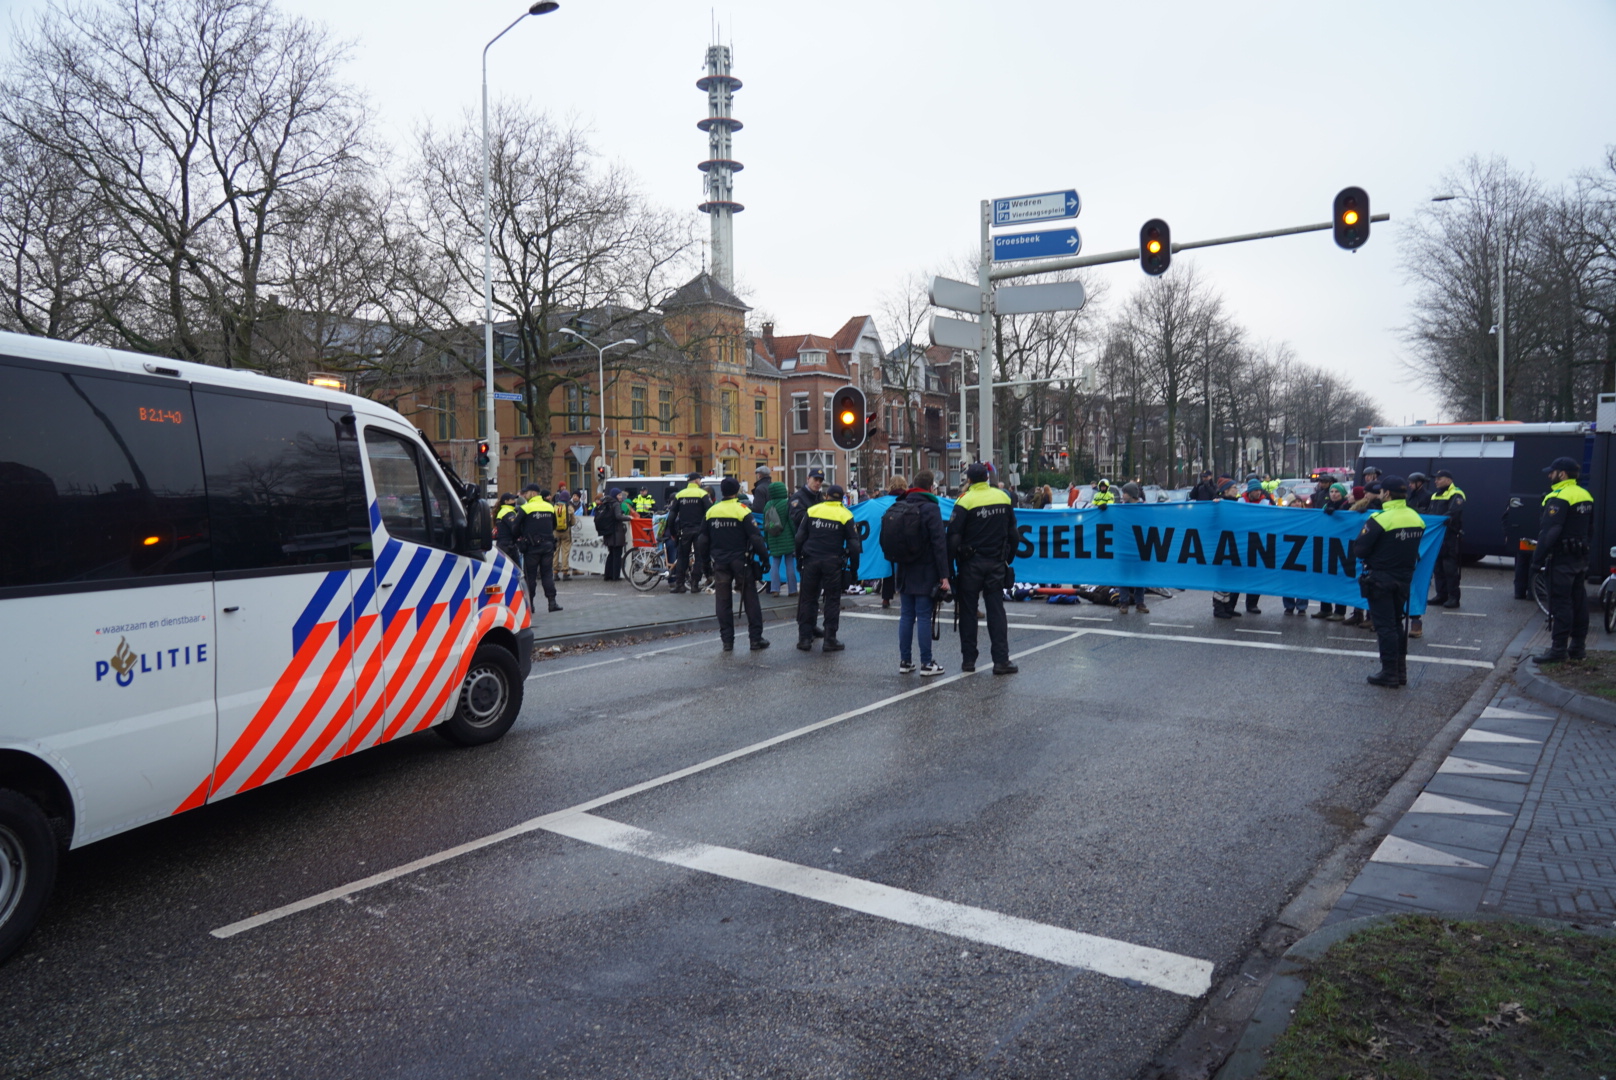 92 klimaatactivisten Extinction Rebellion opgepakt in Nijmegen